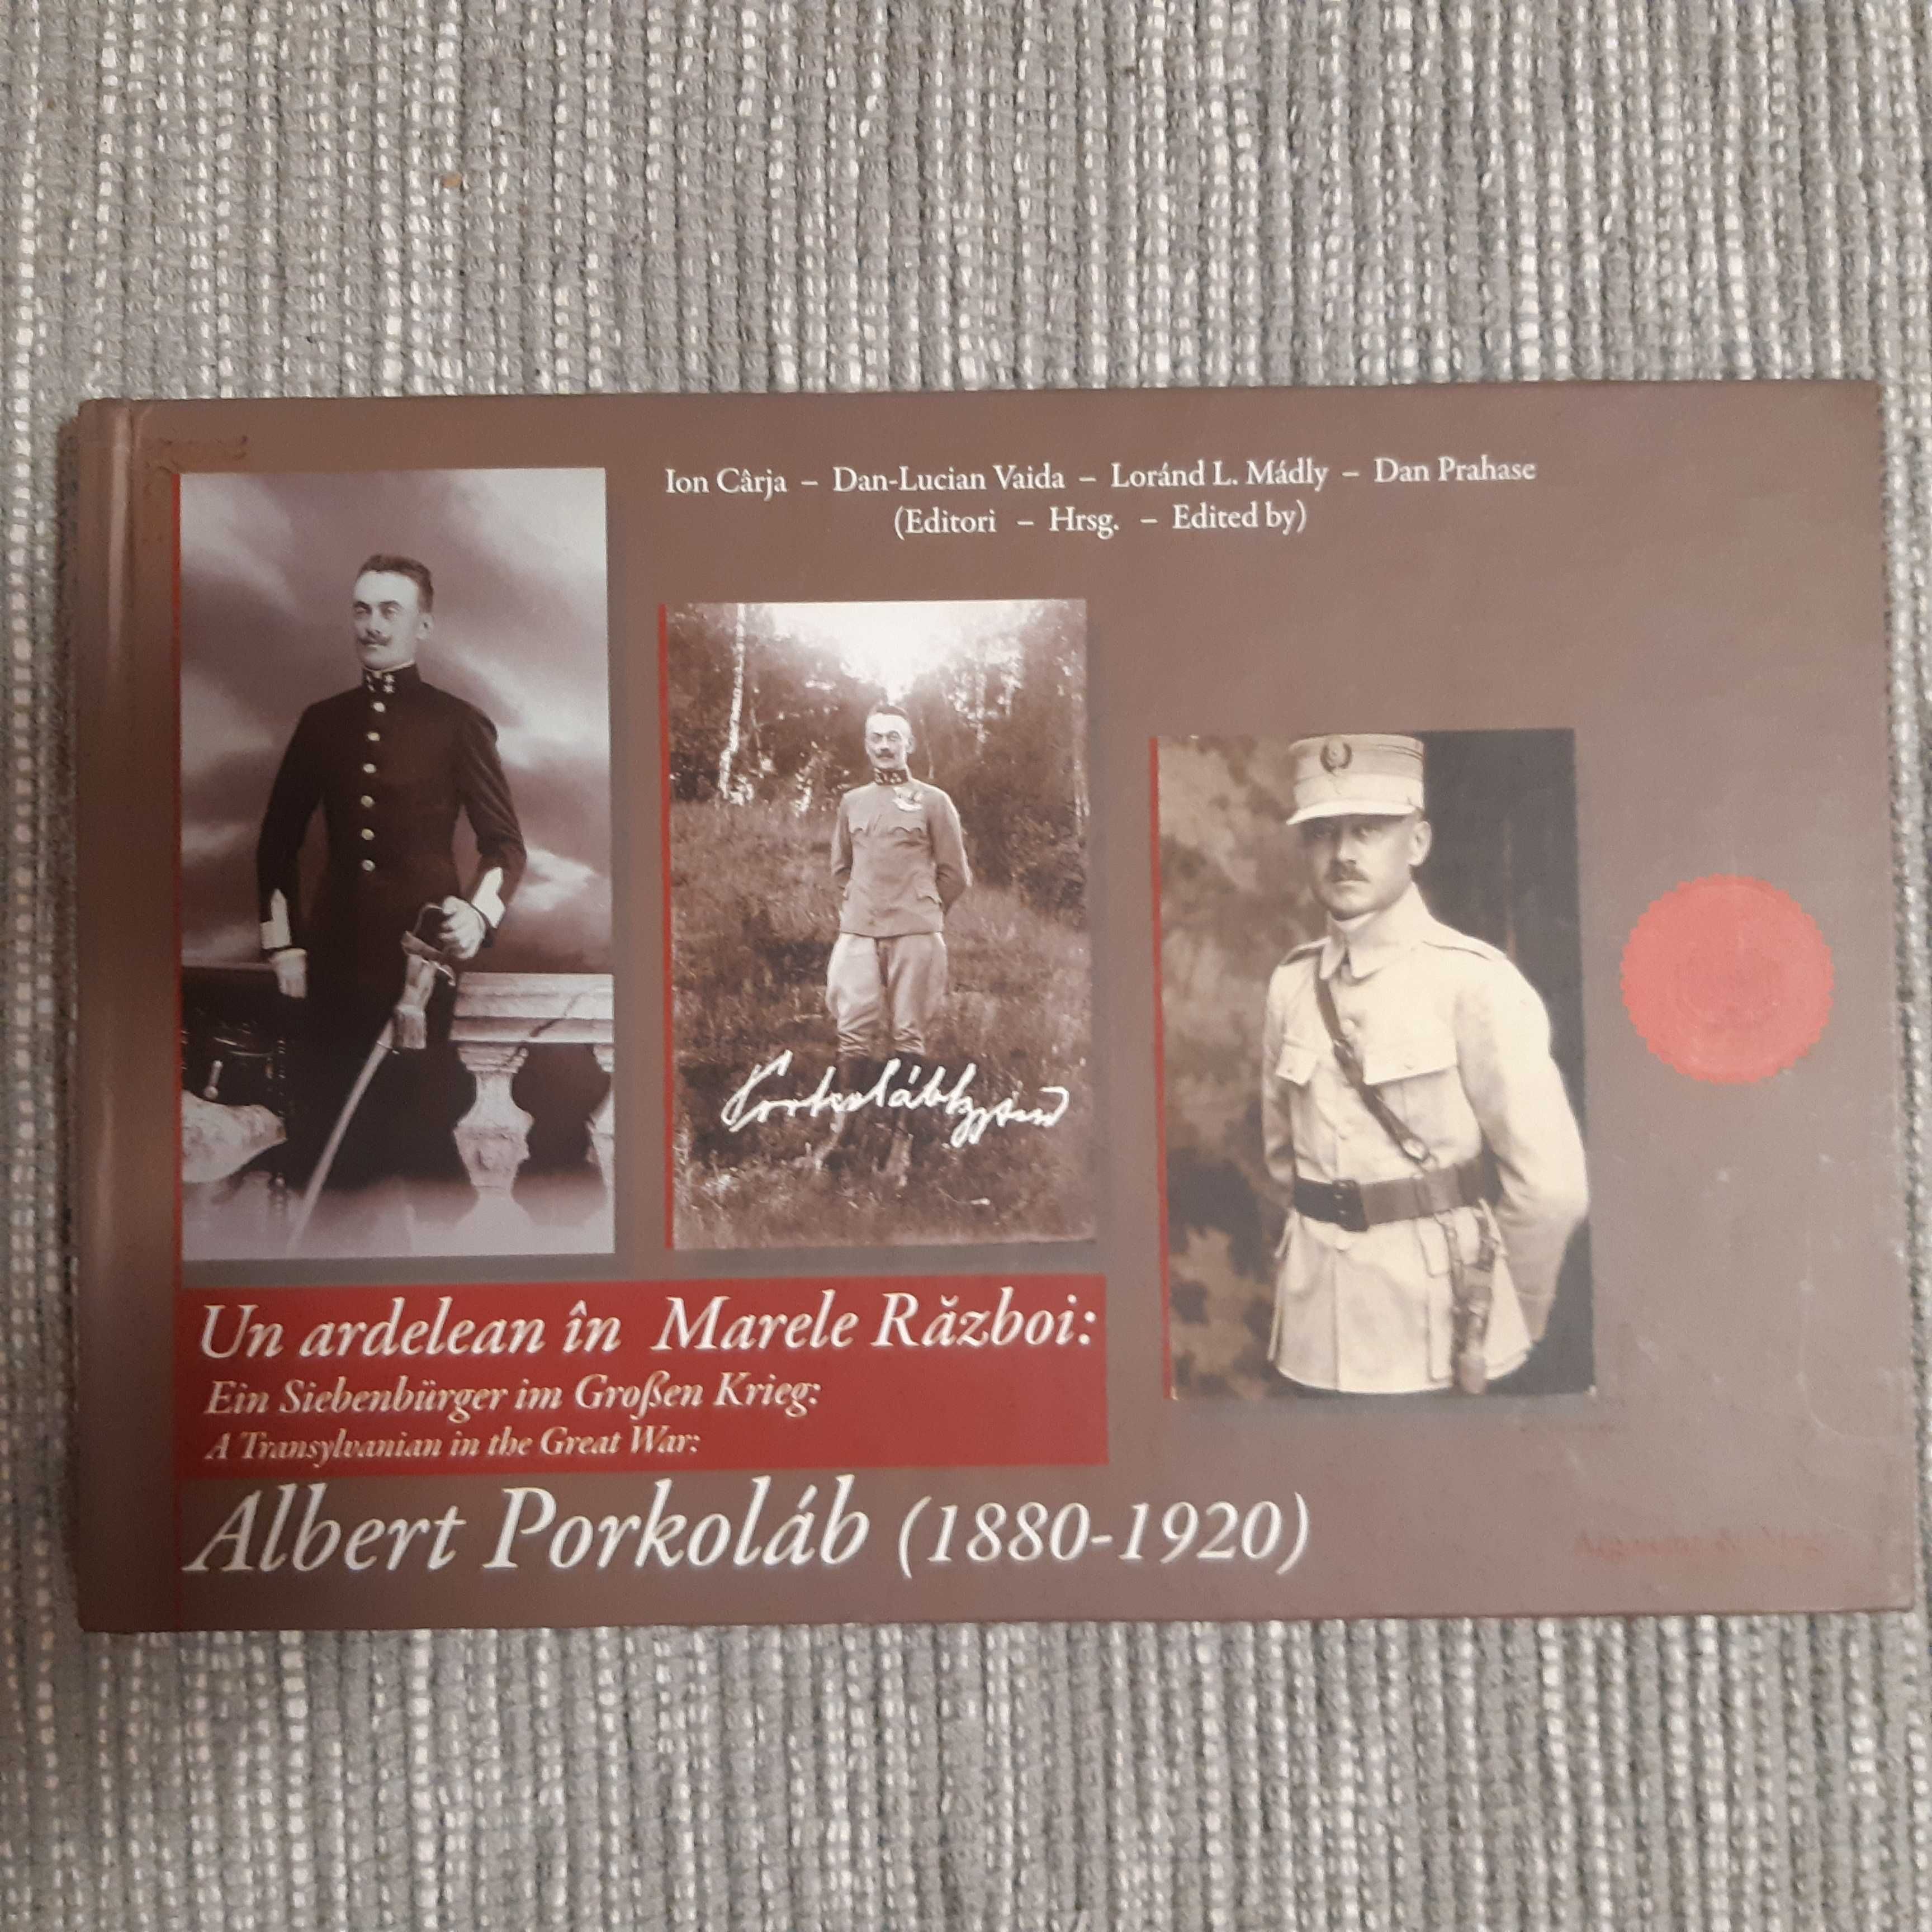 Album "Un ardelean in Marele Razboi: Albert Porkolab (1880-1920)"